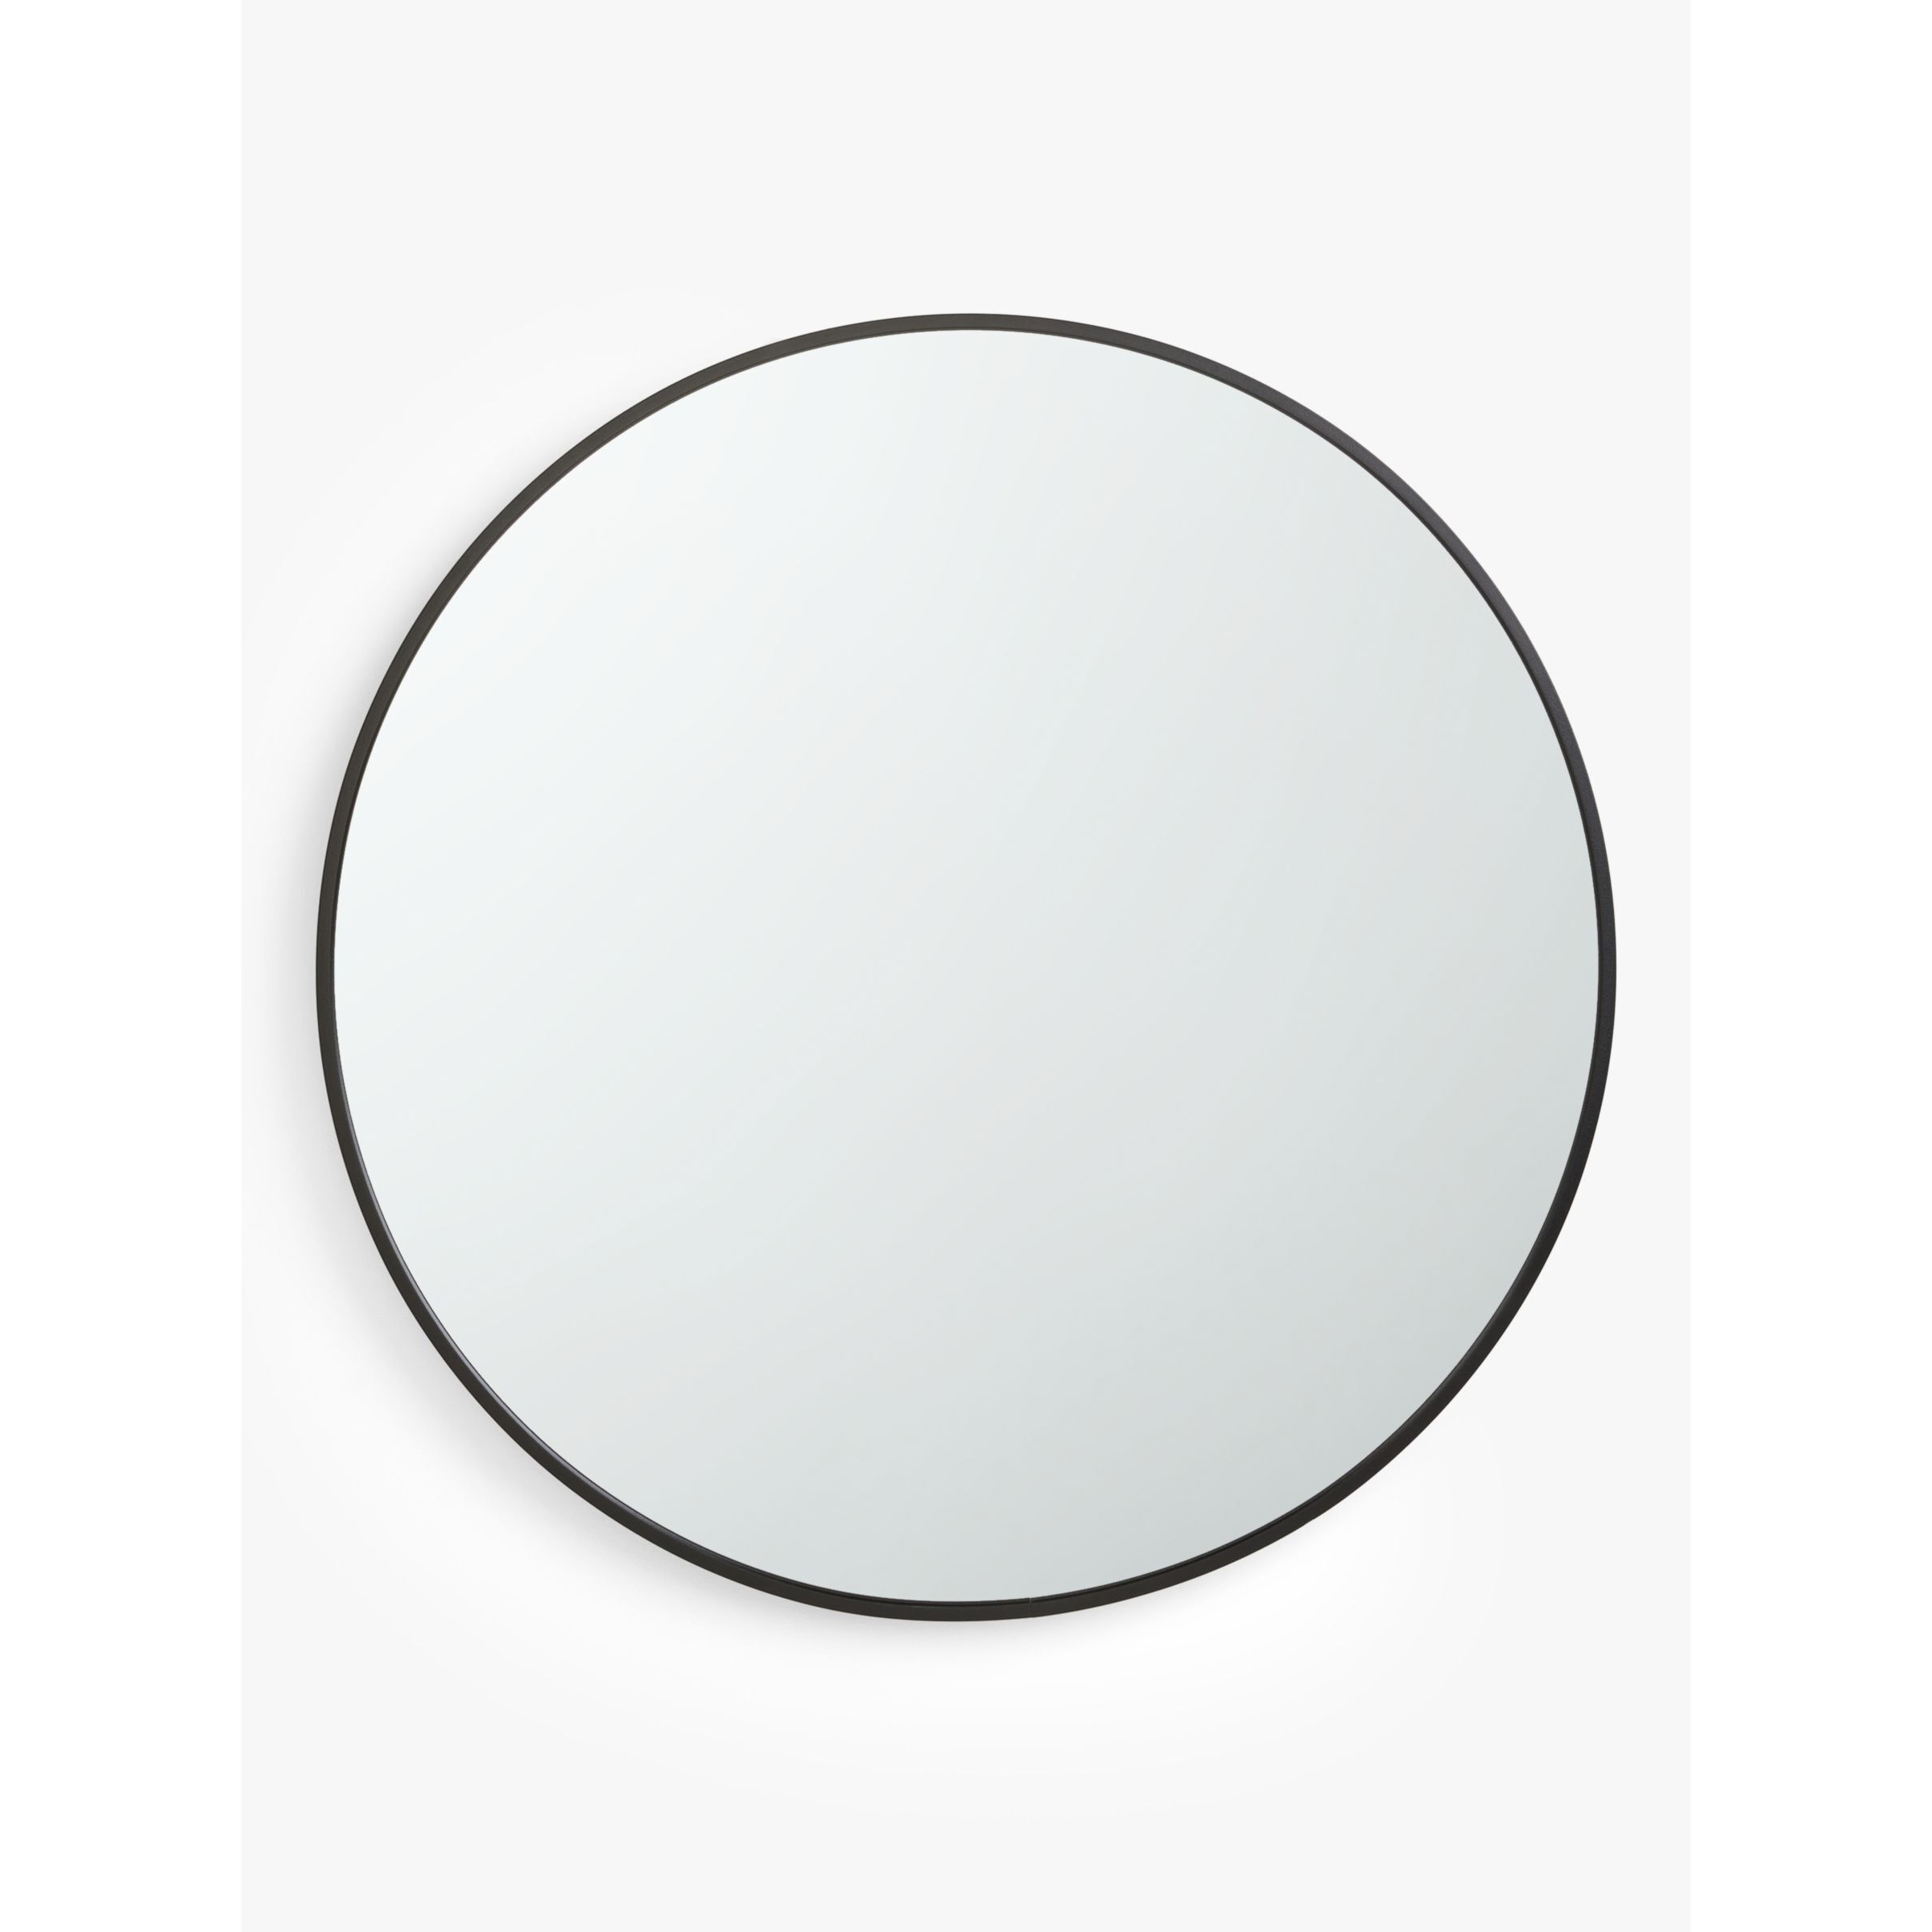 John Lewis ANYDAY Thin Metal Frame Round Wall Mirror, 65cm - image 1